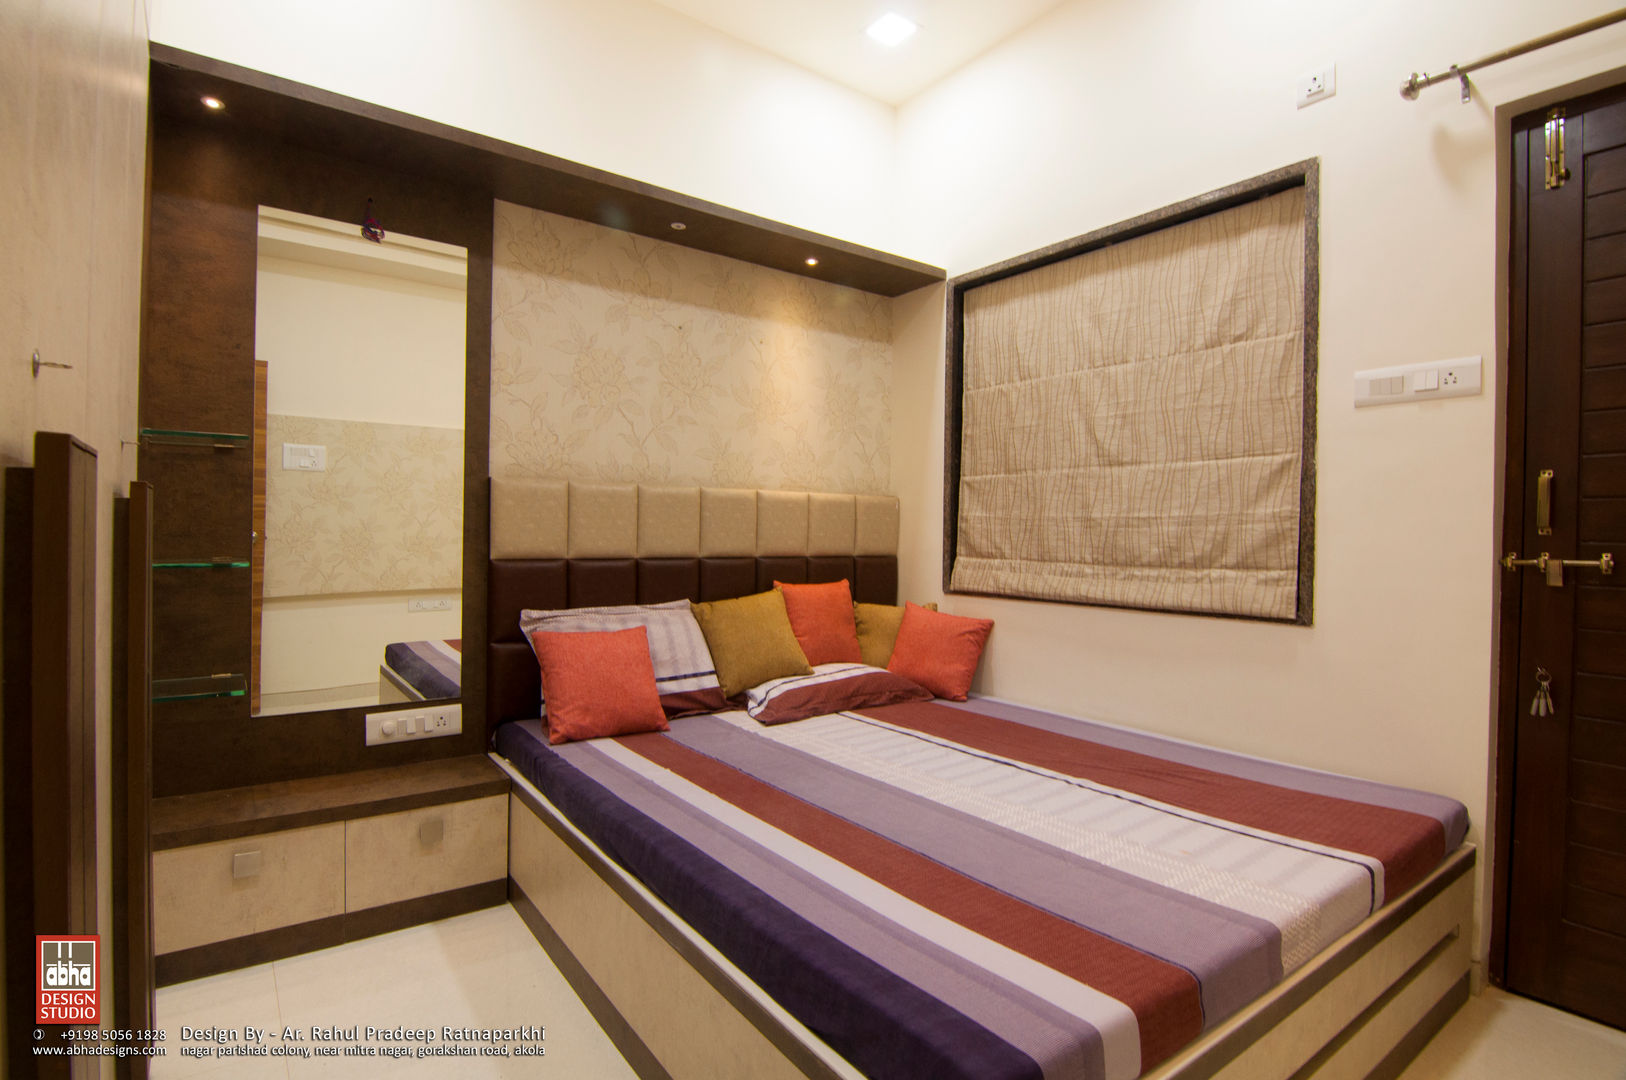 Interior of Residence for Mr. Chandrashekhar R, ABHA Design Studio ABHA Design Studio Dormitorios de estilo minimalista Camas y cabeceros